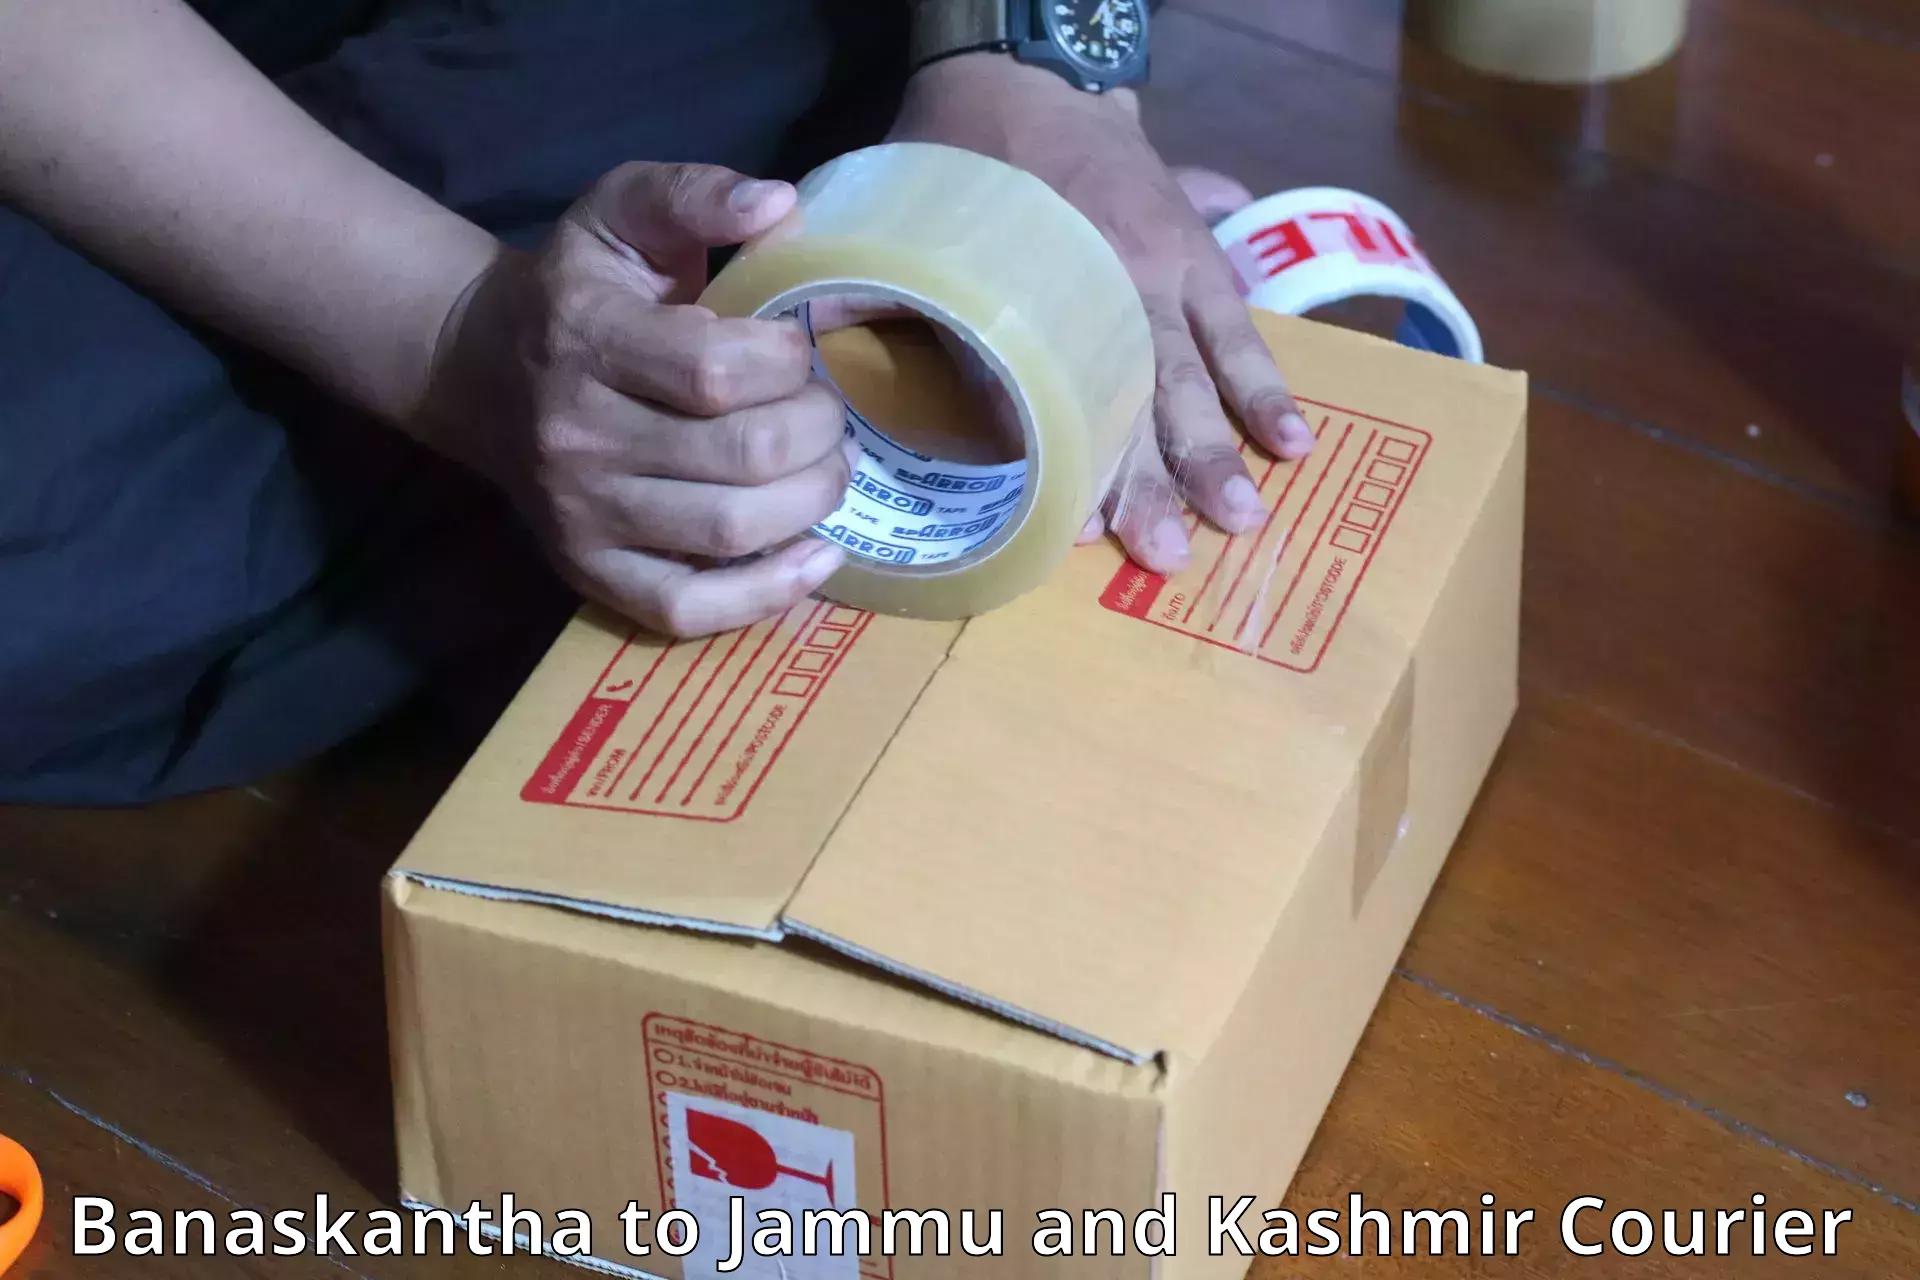 Luggage delivery app Banaskantha to Jammu